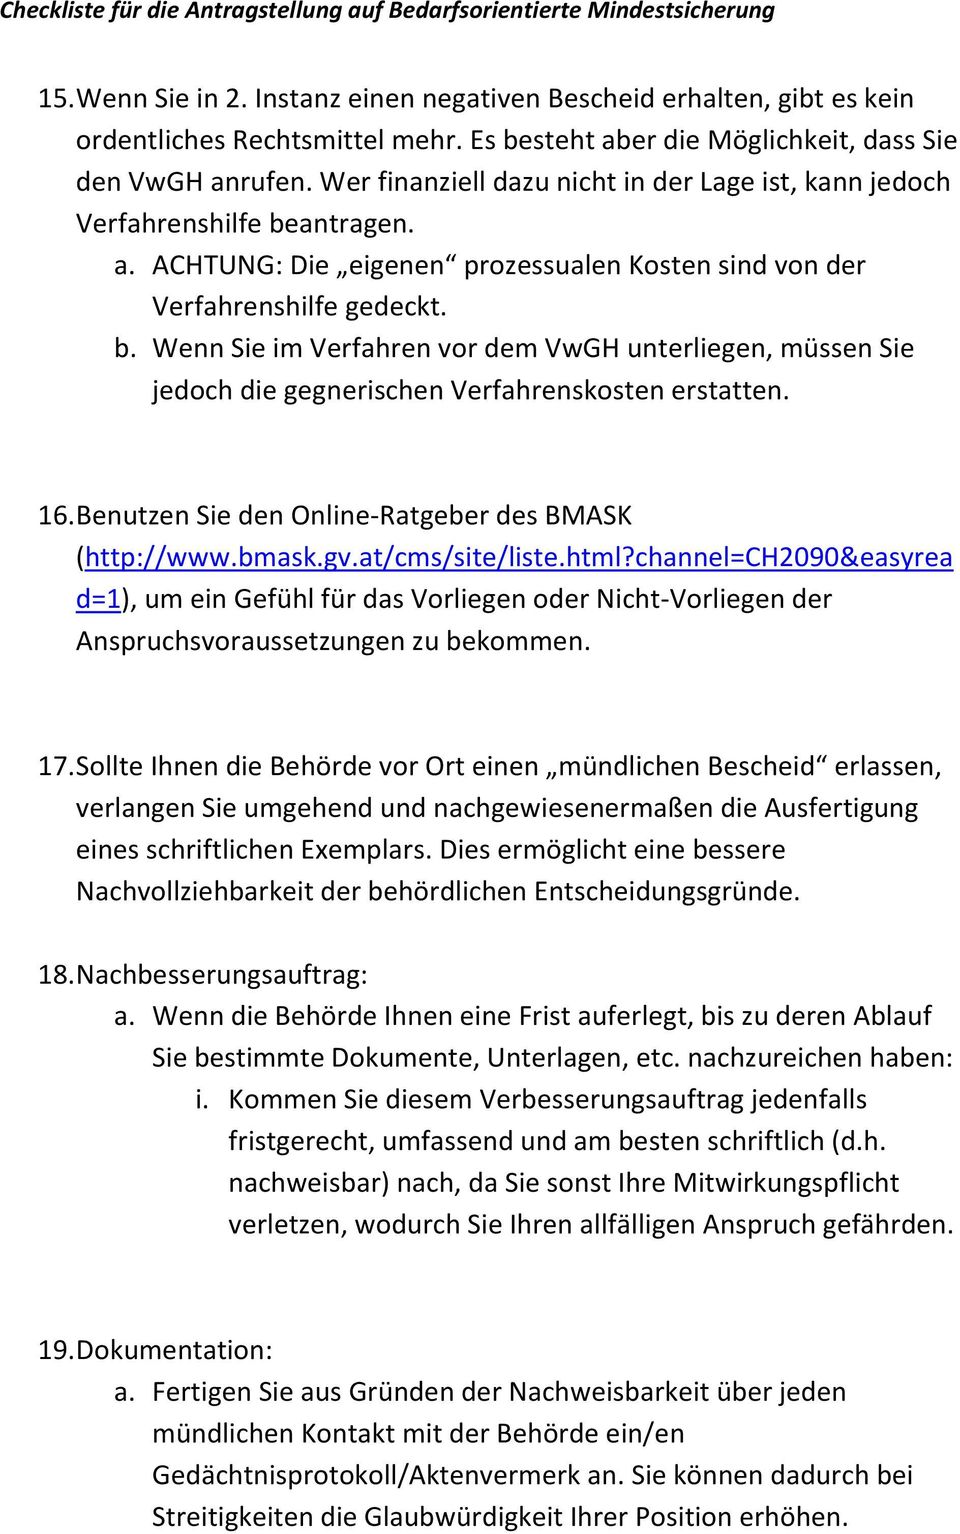 16. Benutzen Sie den Online-Ratgeber des BMASK (http://www.bmask.gv.at/cms/site/liste.html?